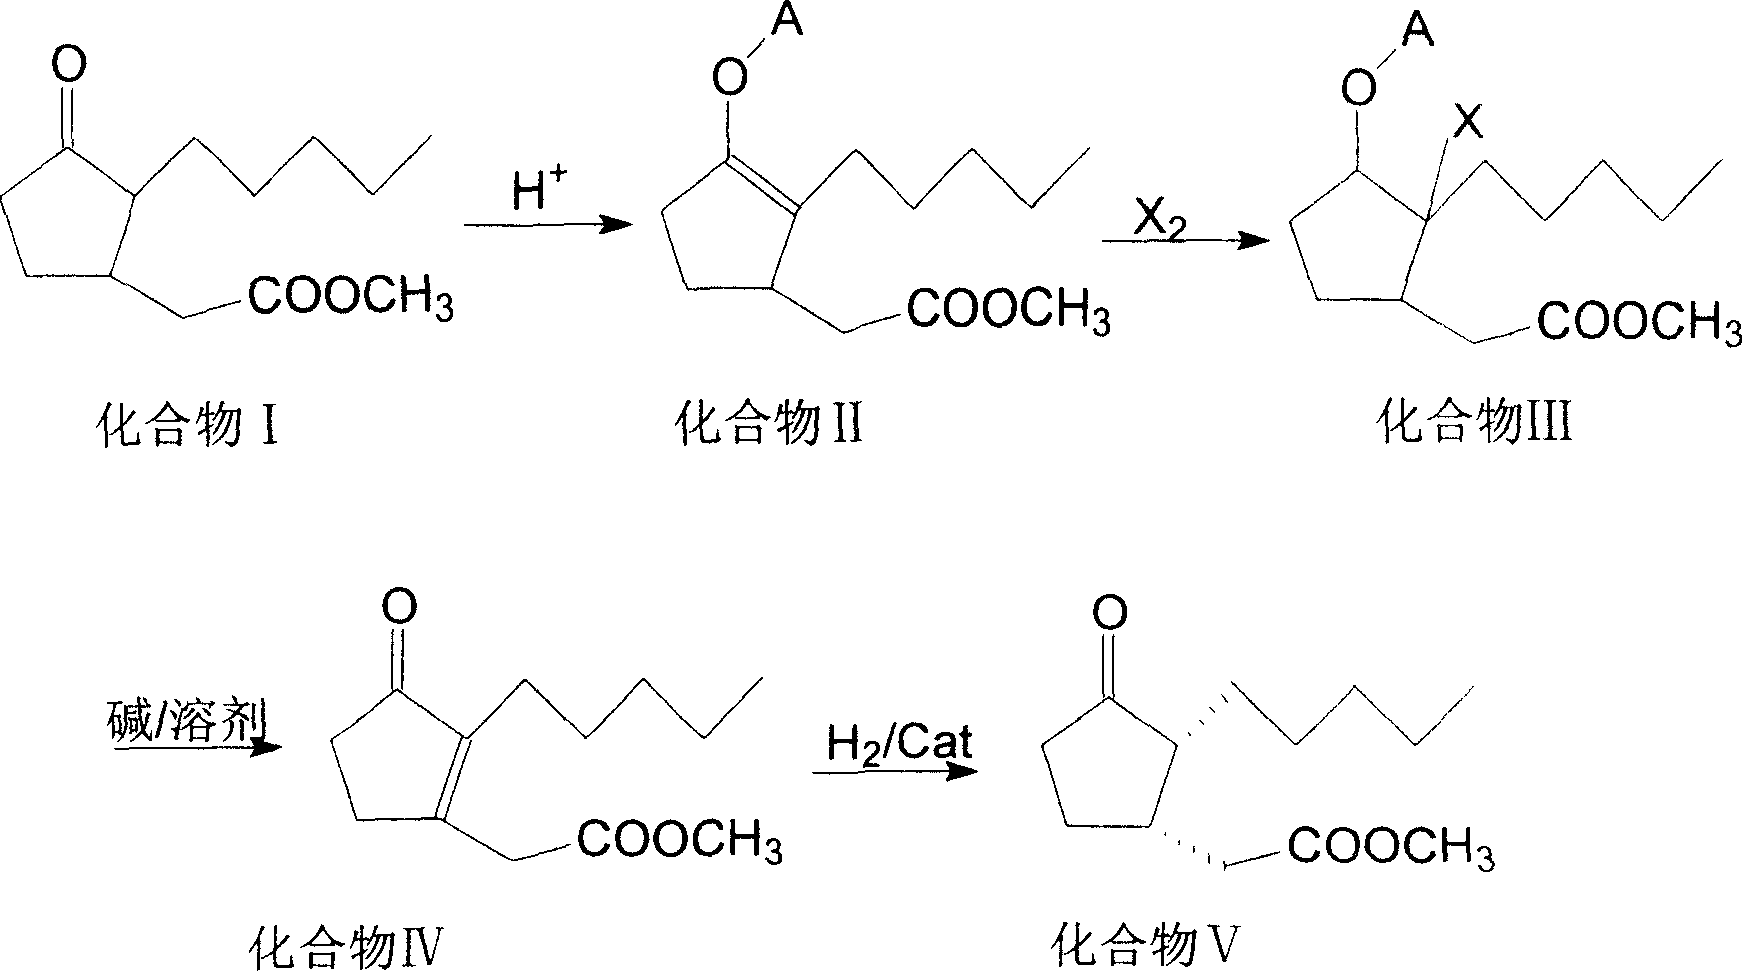 Synthesizing process of cis-dihydro jasmine keto-acid methyl ester